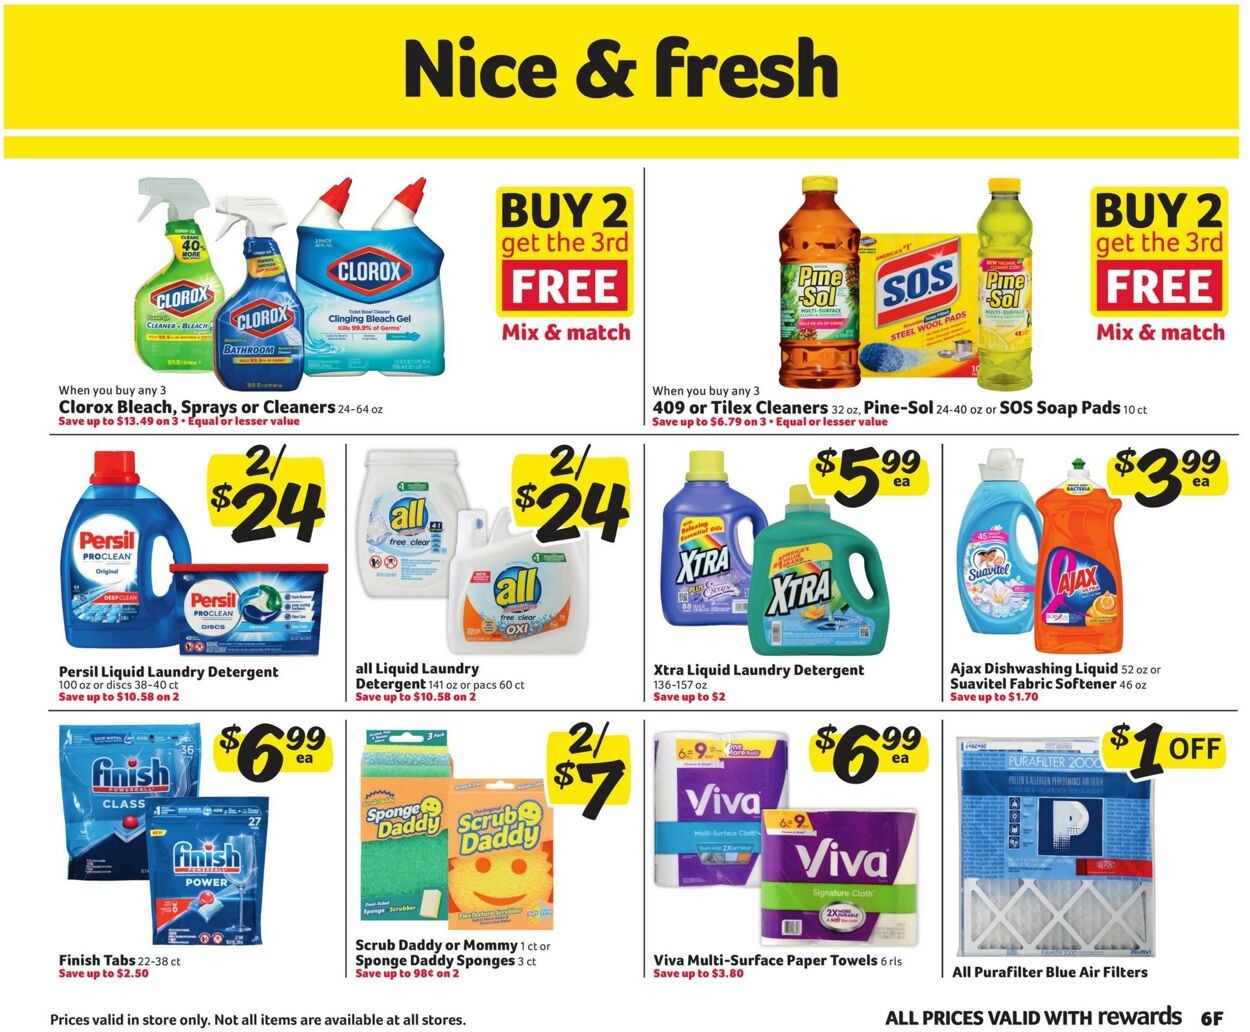 Weekly ad Harvey's Supermarkets 03/01/2023 - 03/14/2023